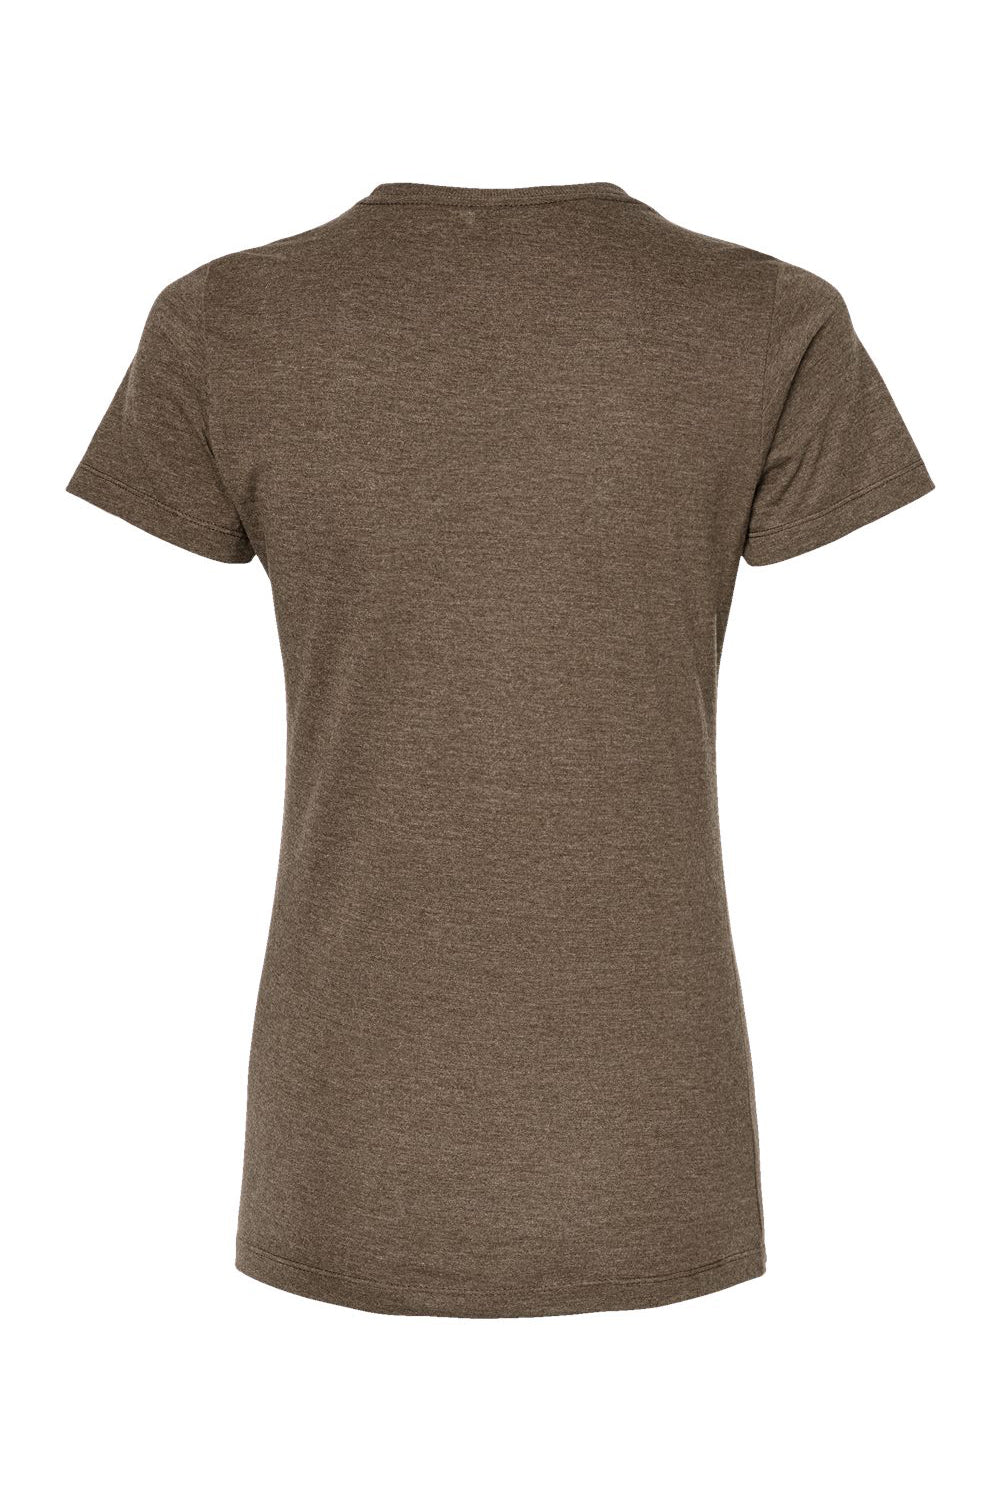 Tultex 542 Womens Premium Short Sleeve Crewneck T-Shirt Heather Brown Flat Back